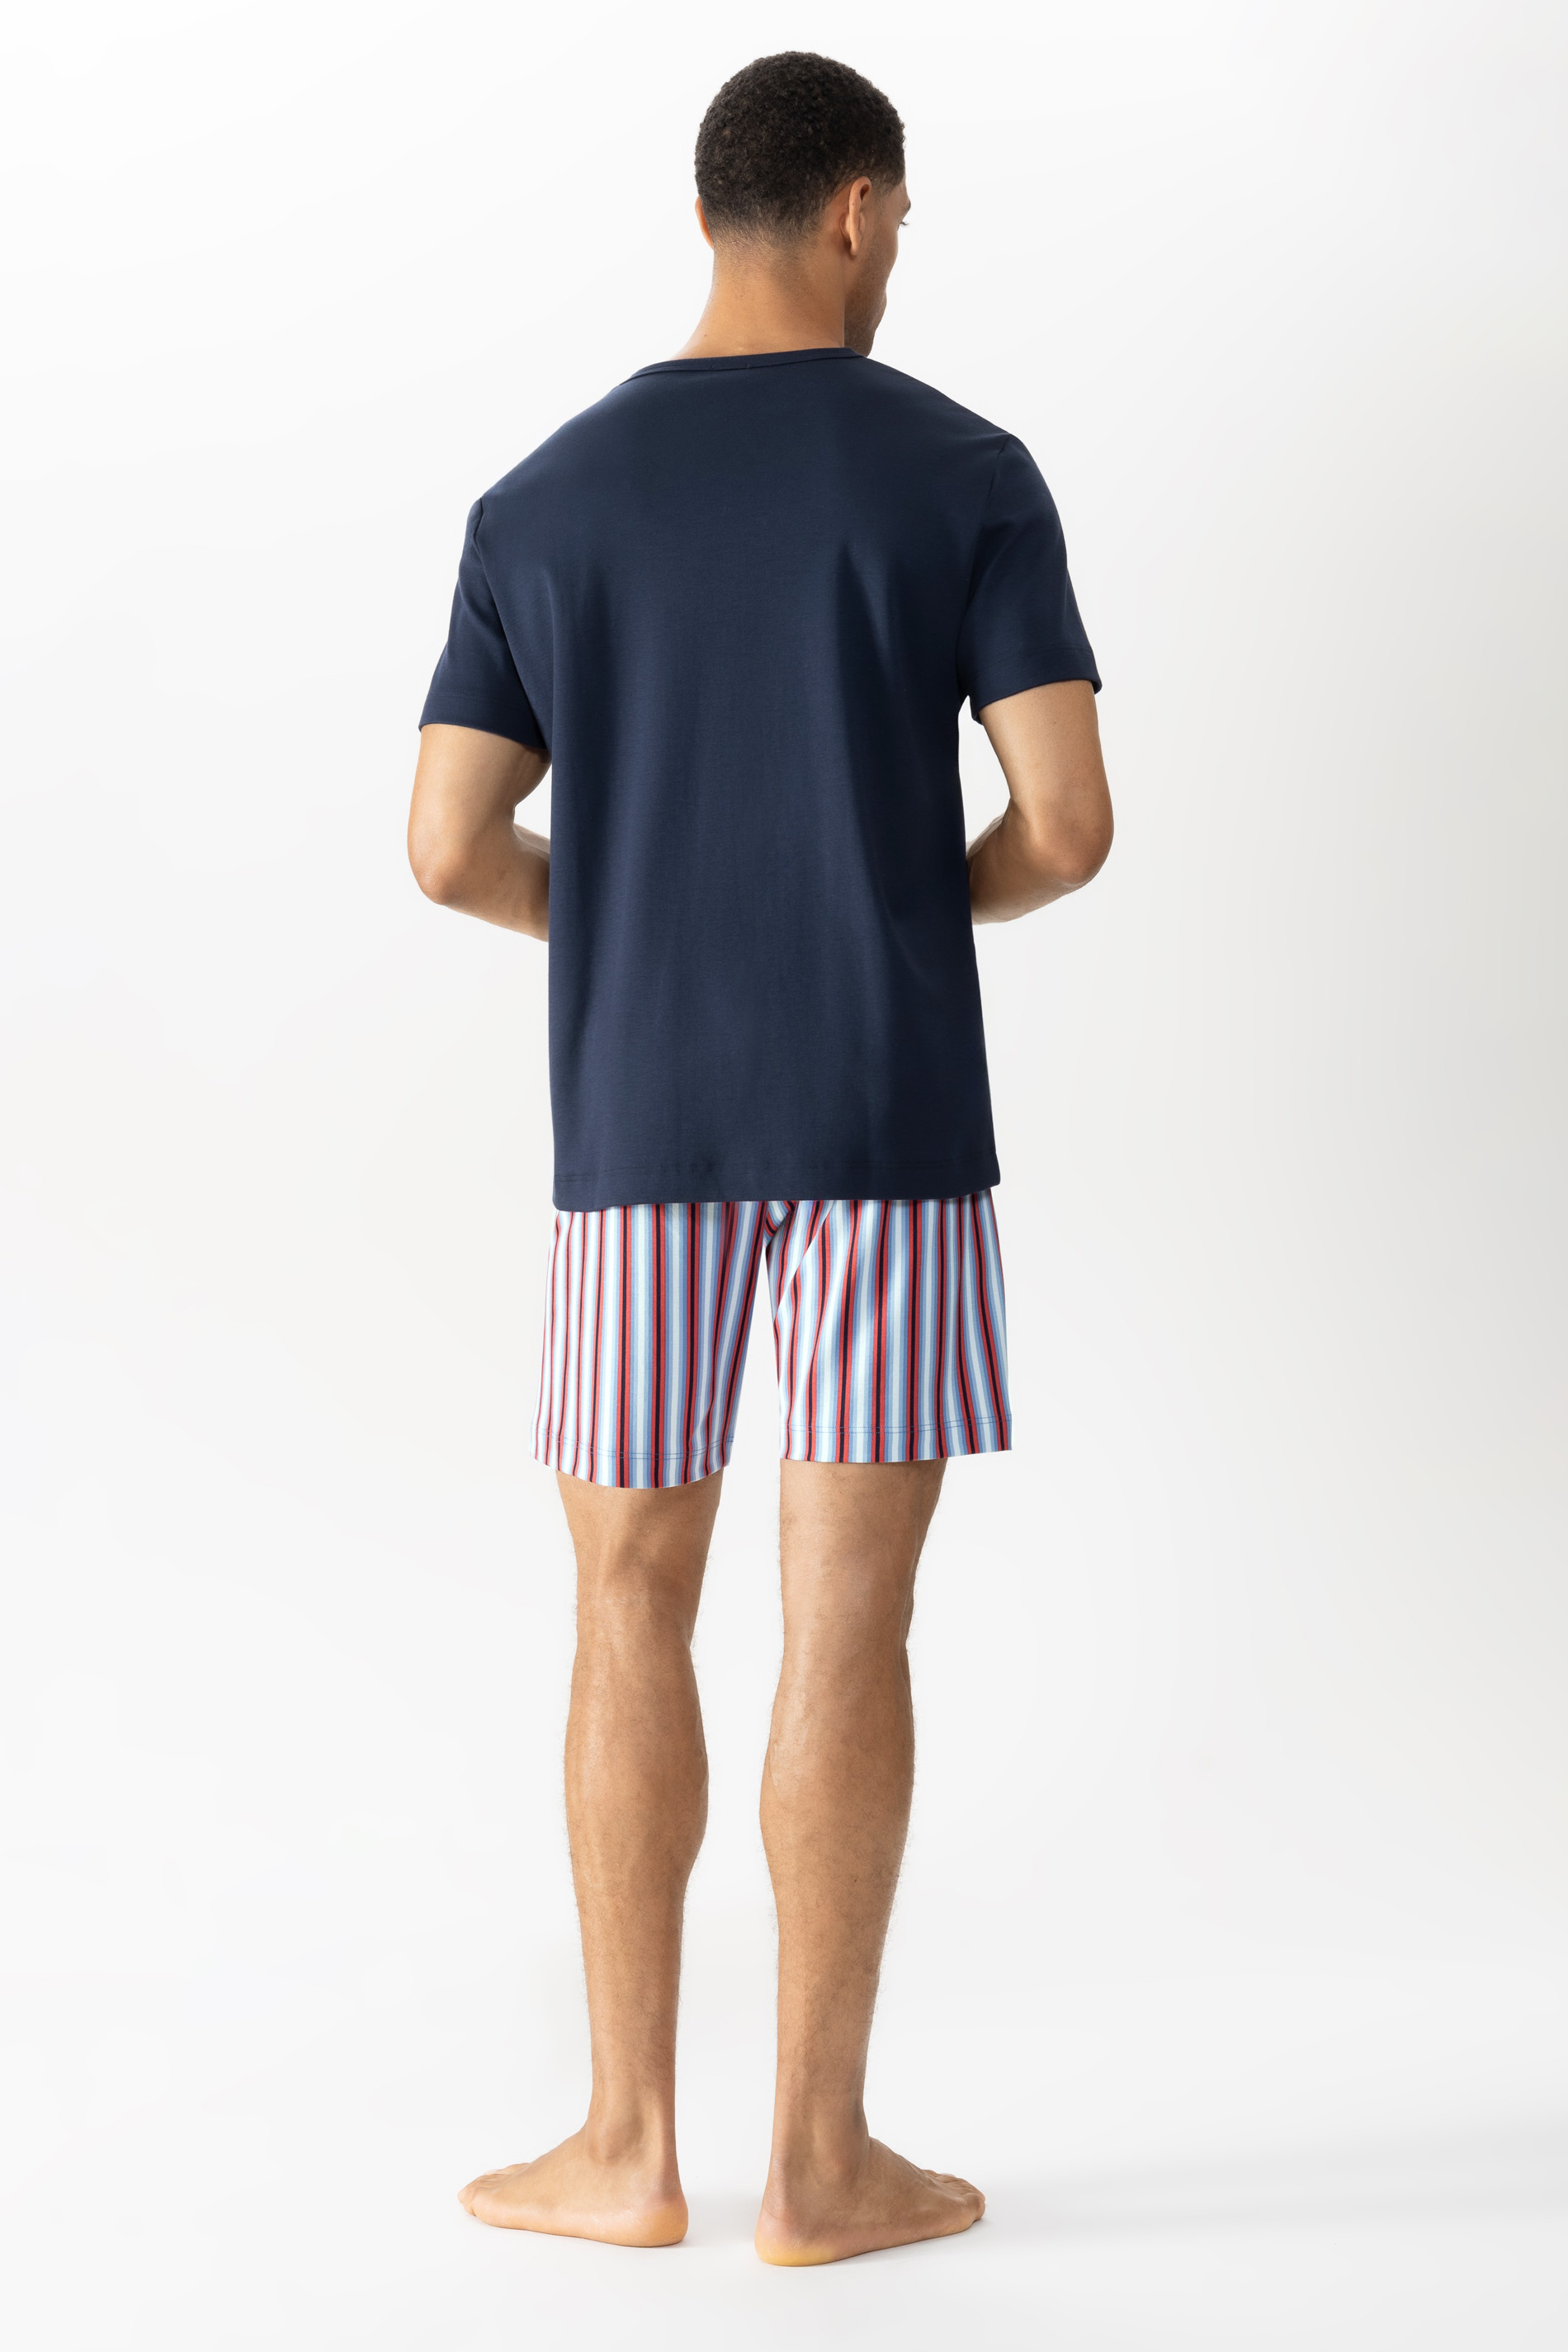 Pyjamas Serie Gradient Stripes Rear View | mey®